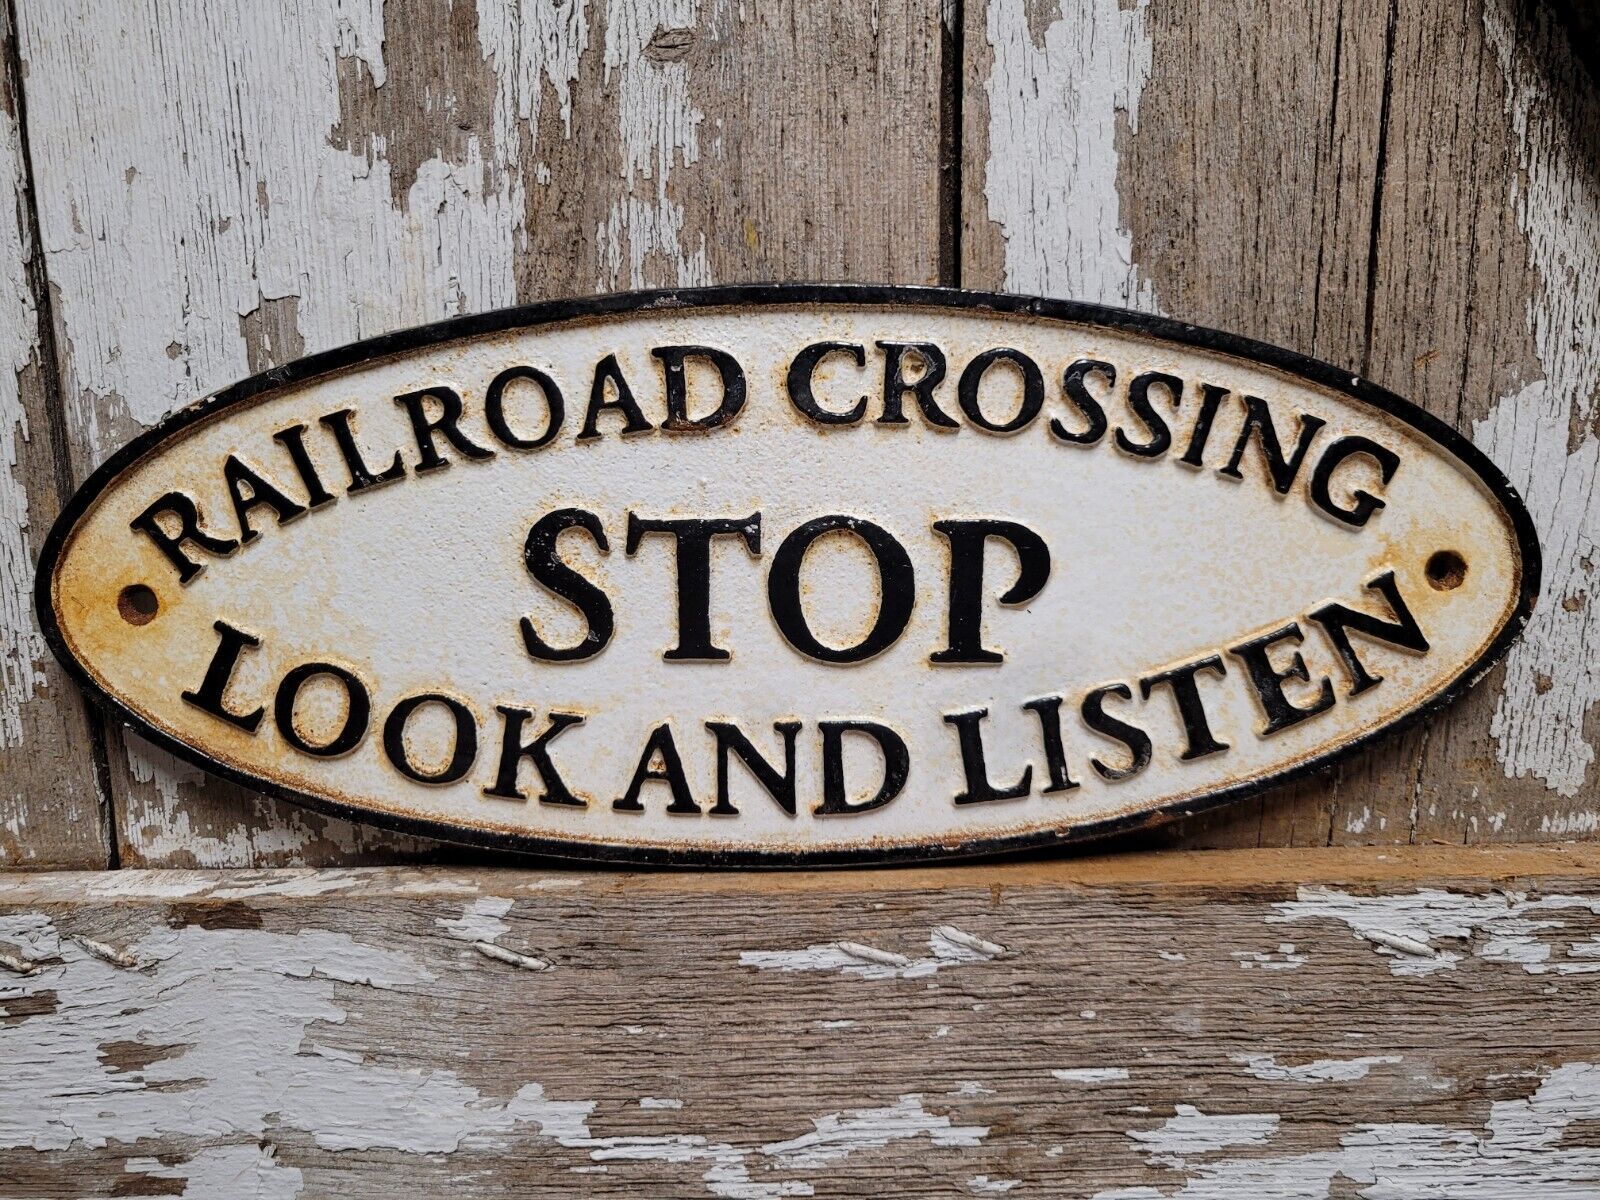 VINTAGE RAILROAD CROSSING SIGN CAST IRON STOP LOOK LISTEN TRAIN TRACK WARNING 